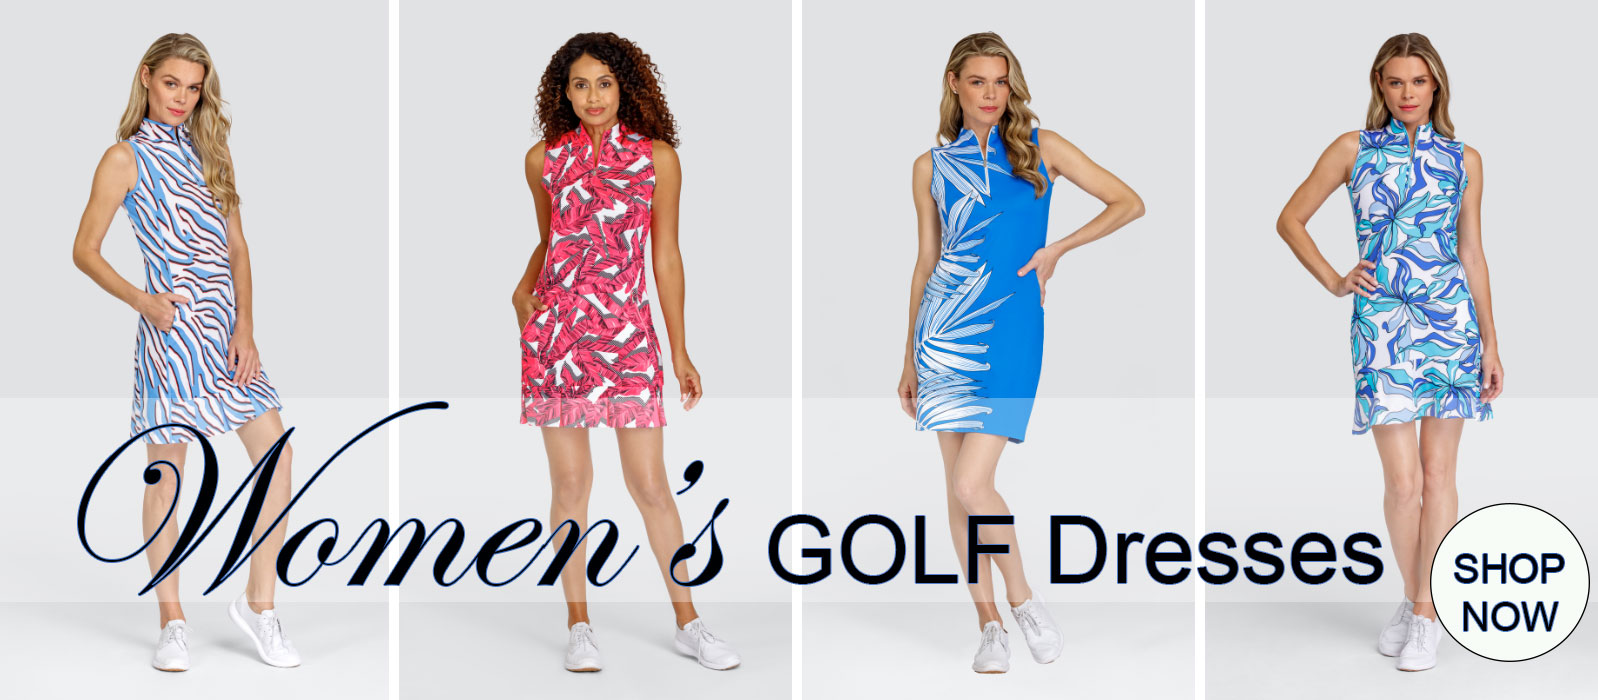 Golfwear and golf clothes for women  Röhnisch Sportswear